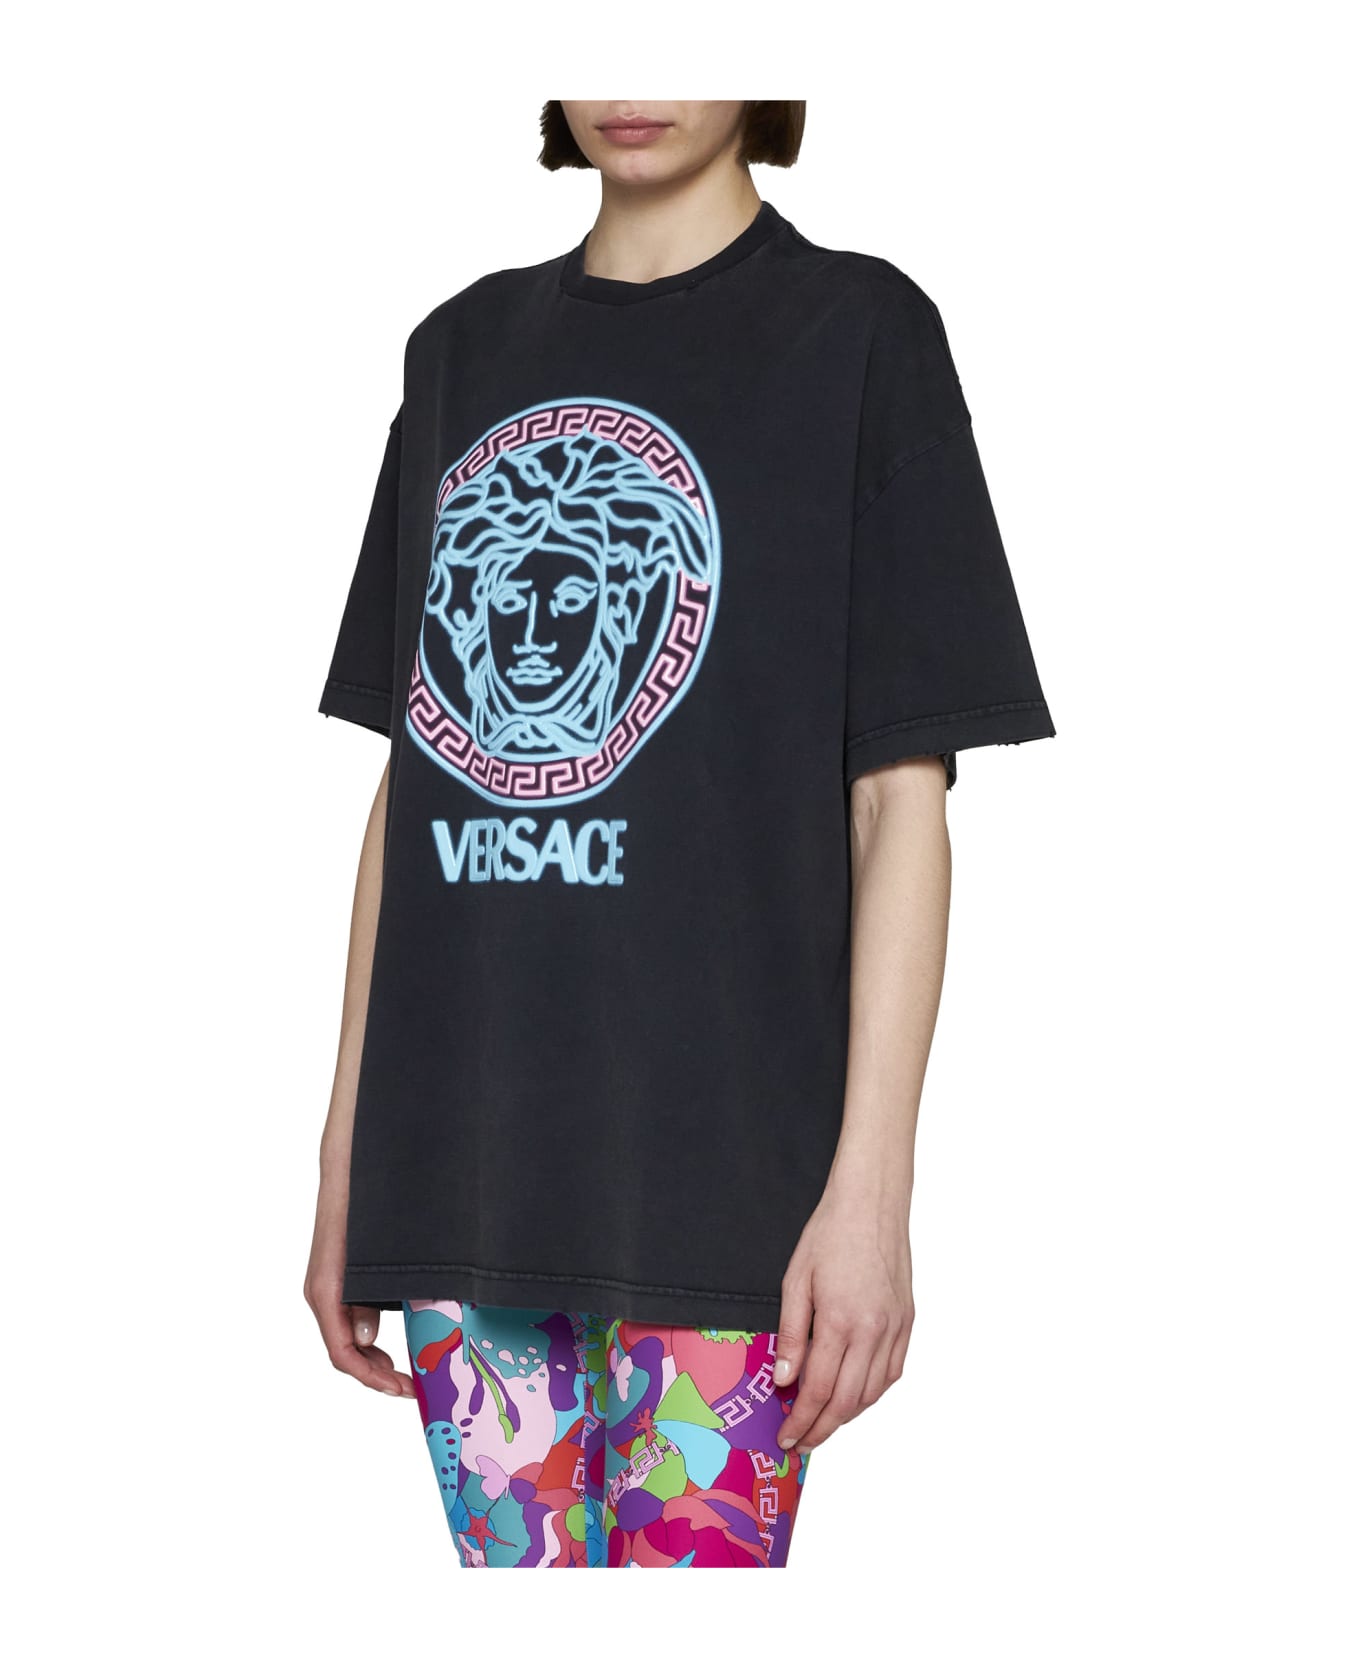 Versace T-shirt With Worn Look - Blacblack+neon azur+neon pink